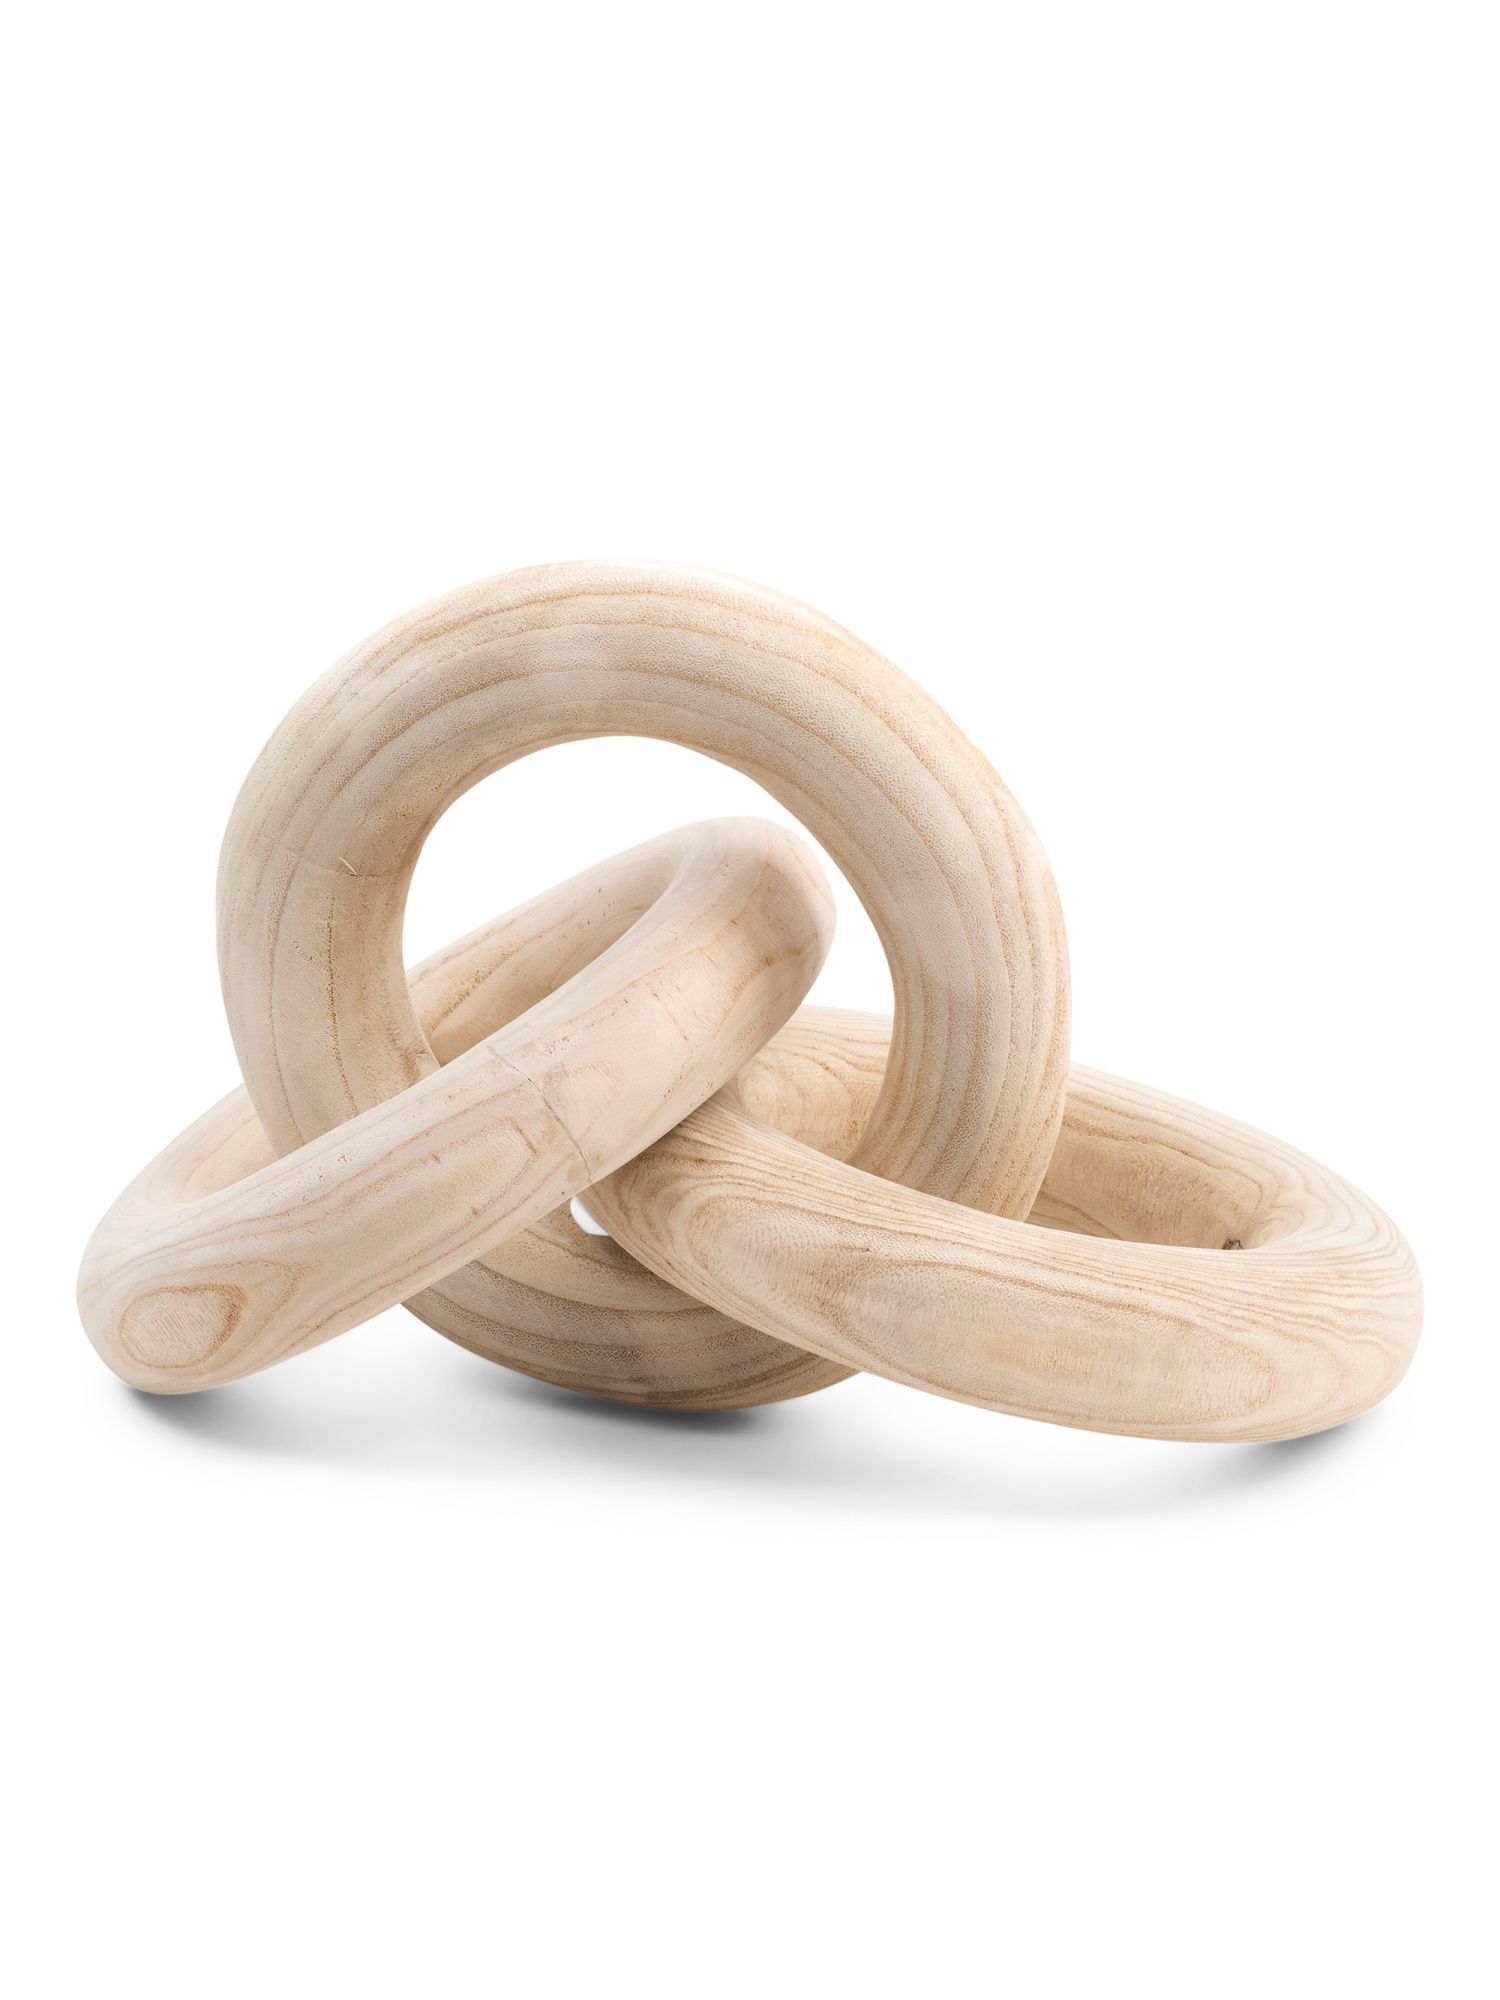 Wooden Rings Decor | TJ Maxx